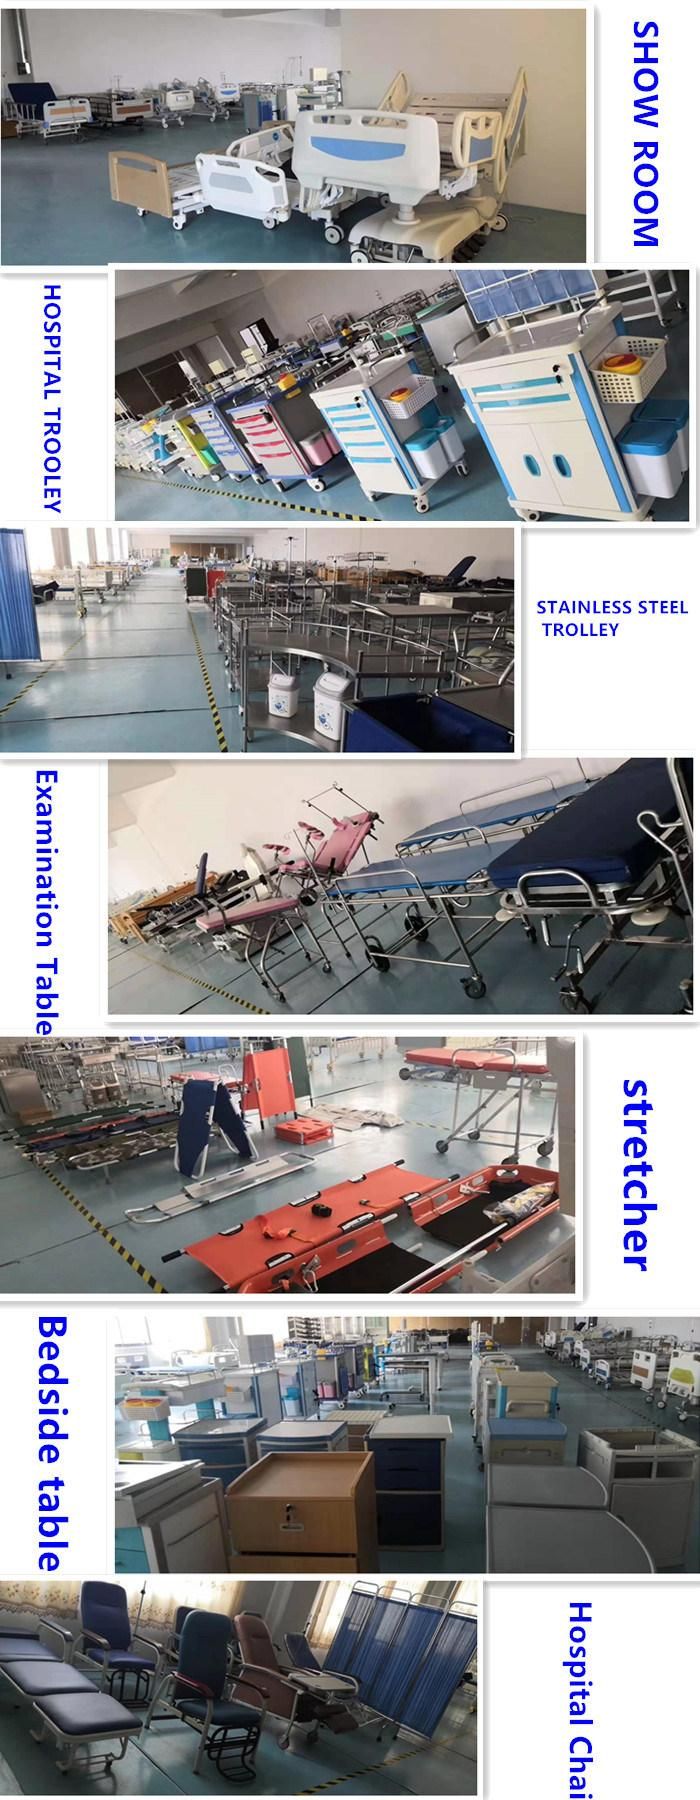 Hospital Patient Hydraulic Transport Stretcher